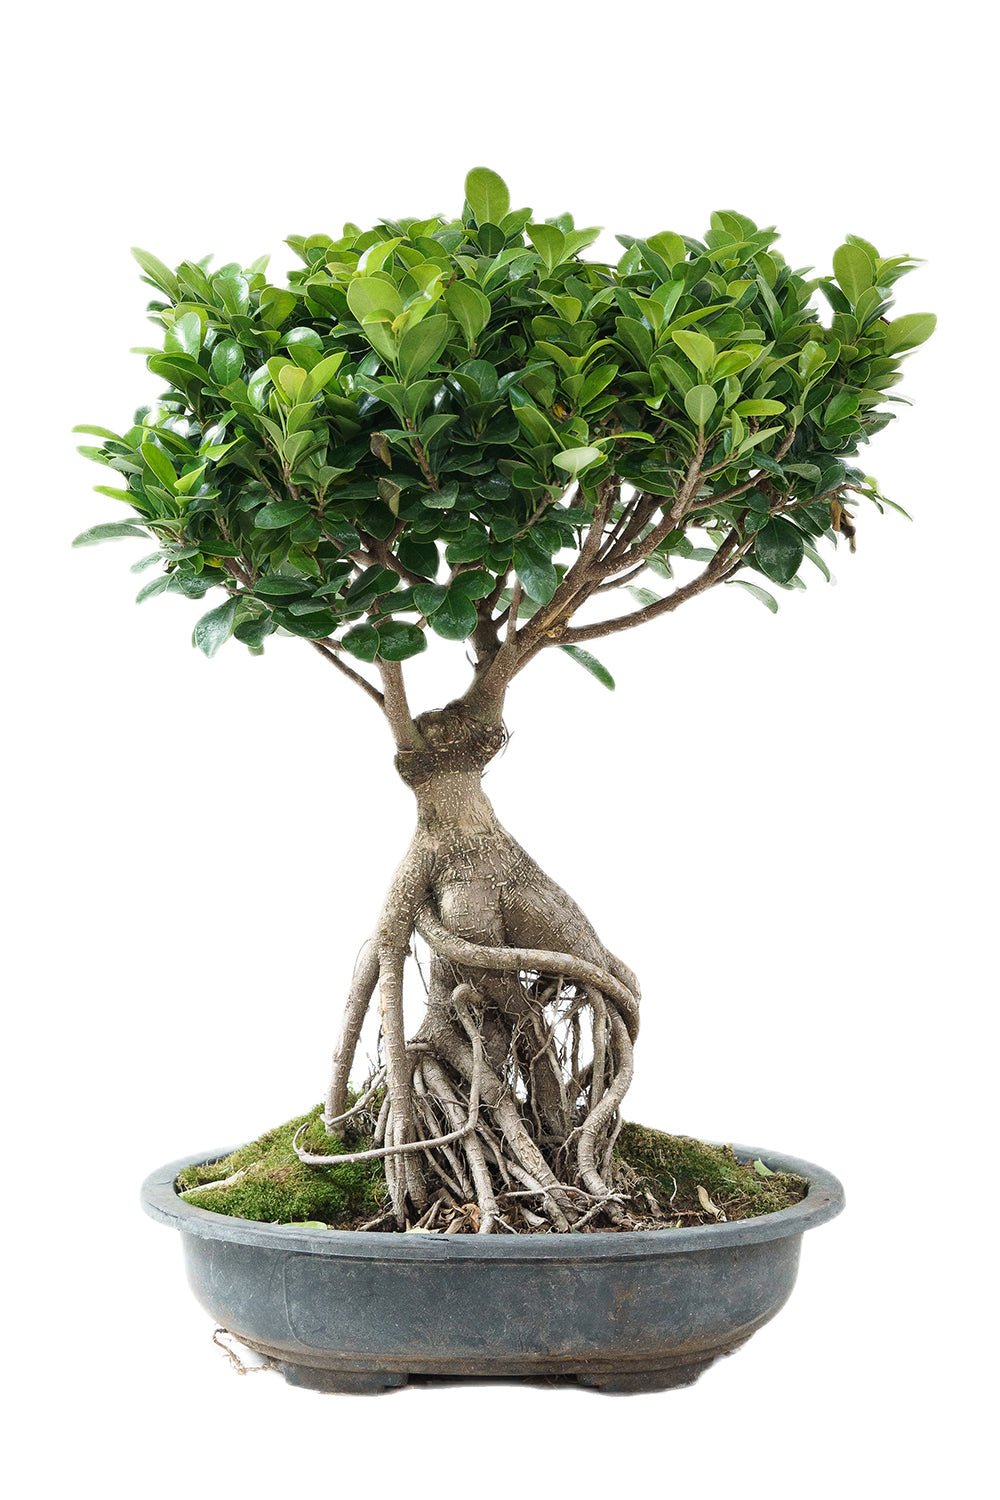 Ficus microcarpa bonsai style Garden Plus